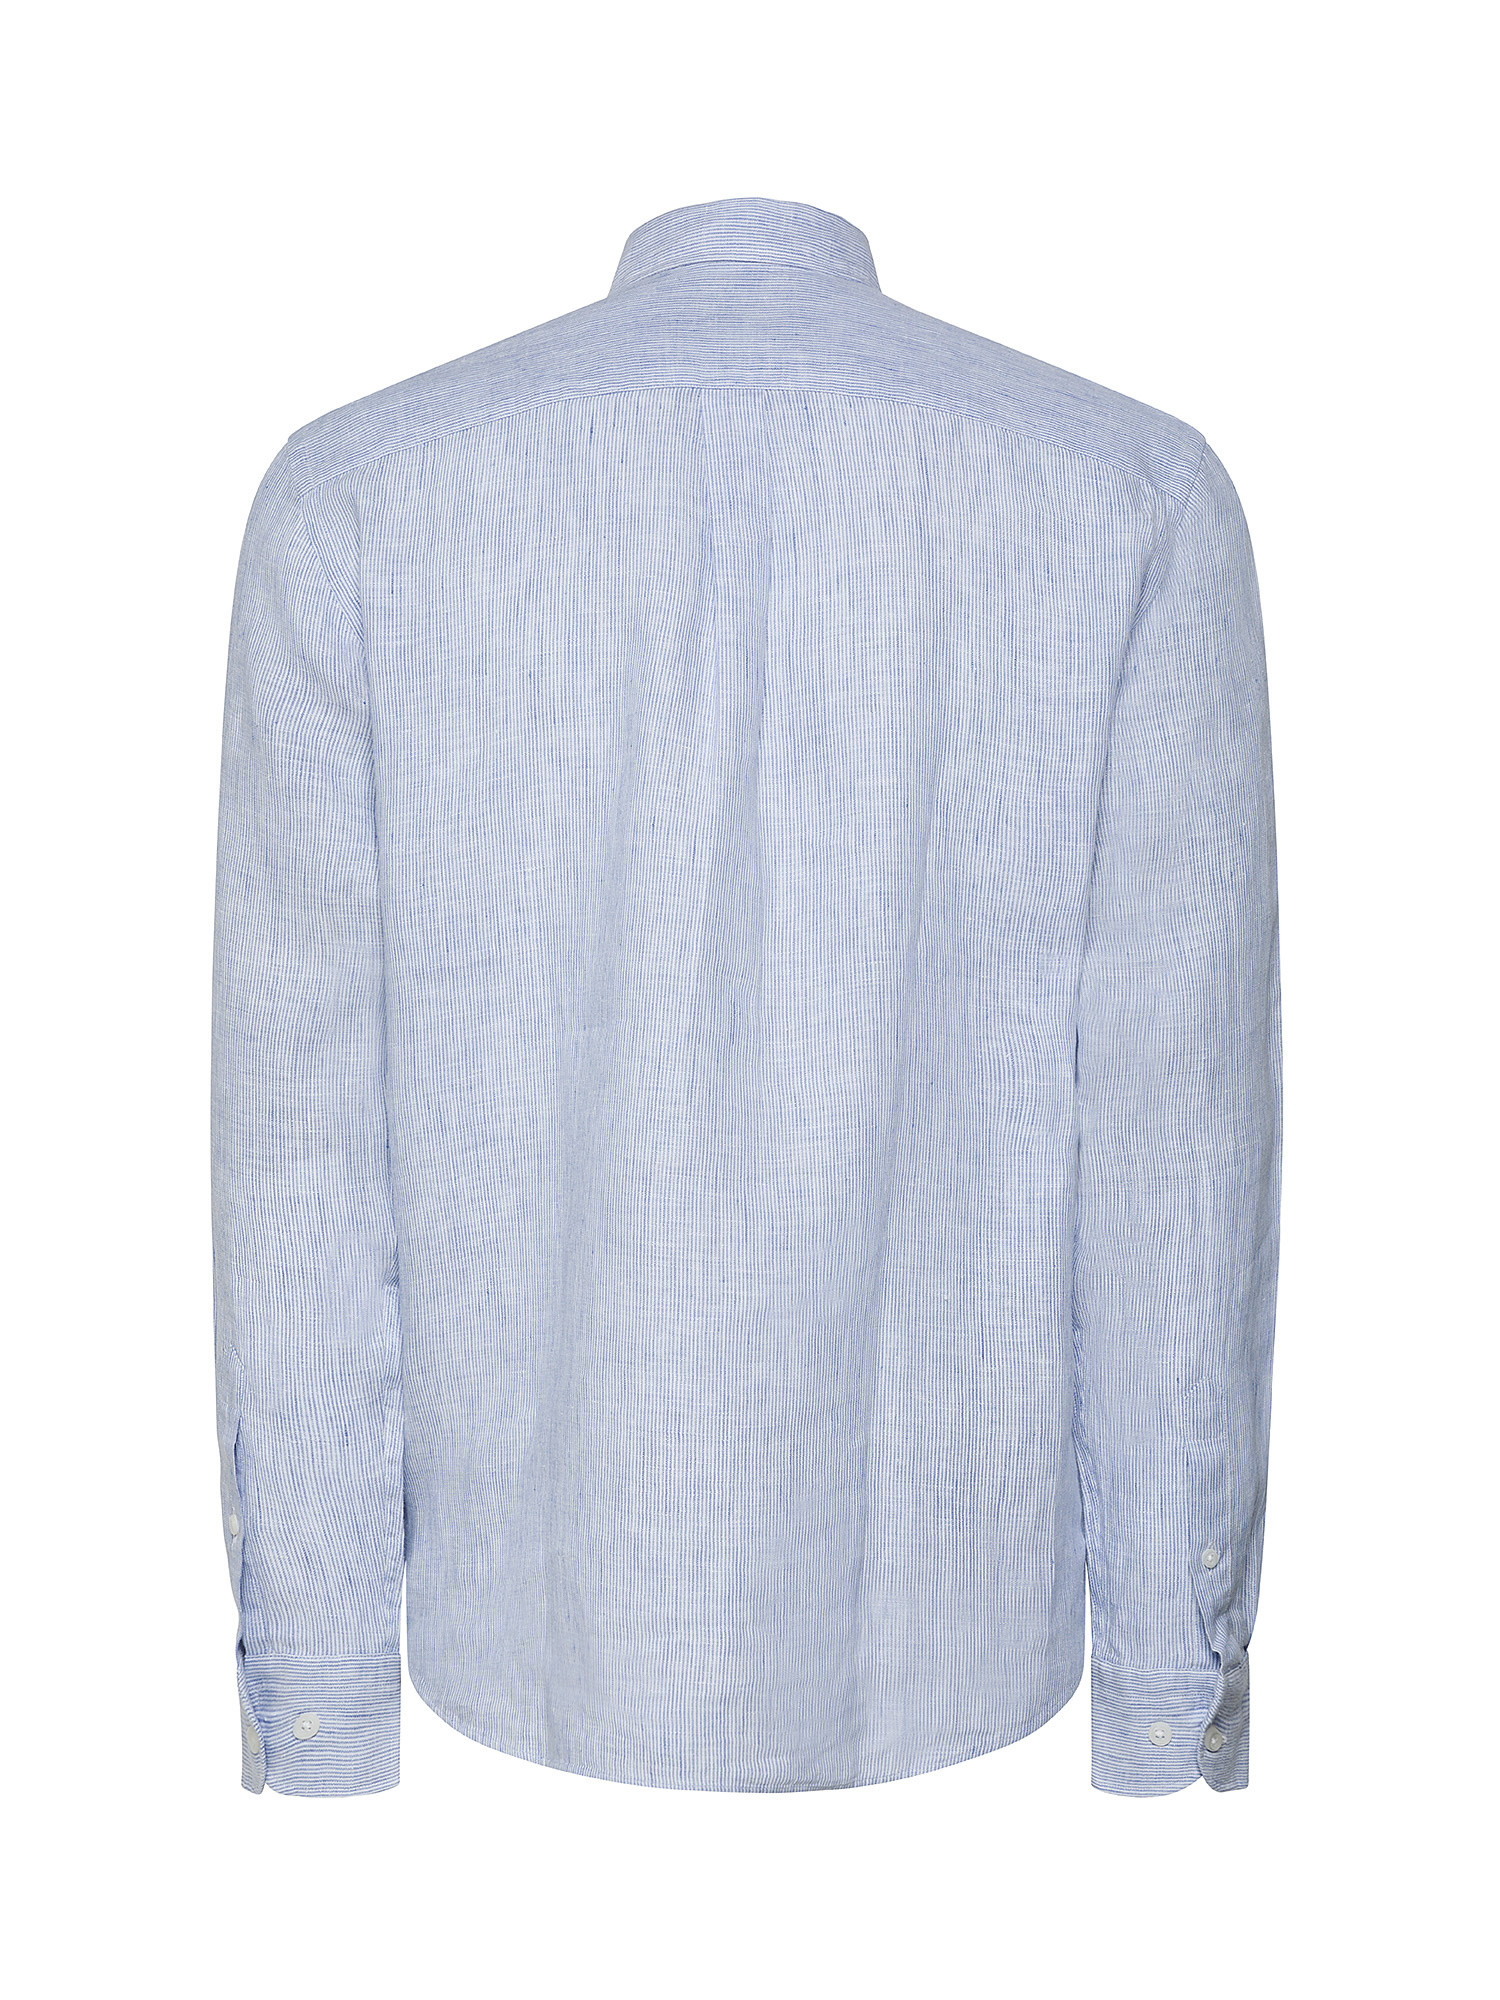 Luca D'Altieri - Camicia tailor fit in puro lino, Blu, large image number 1